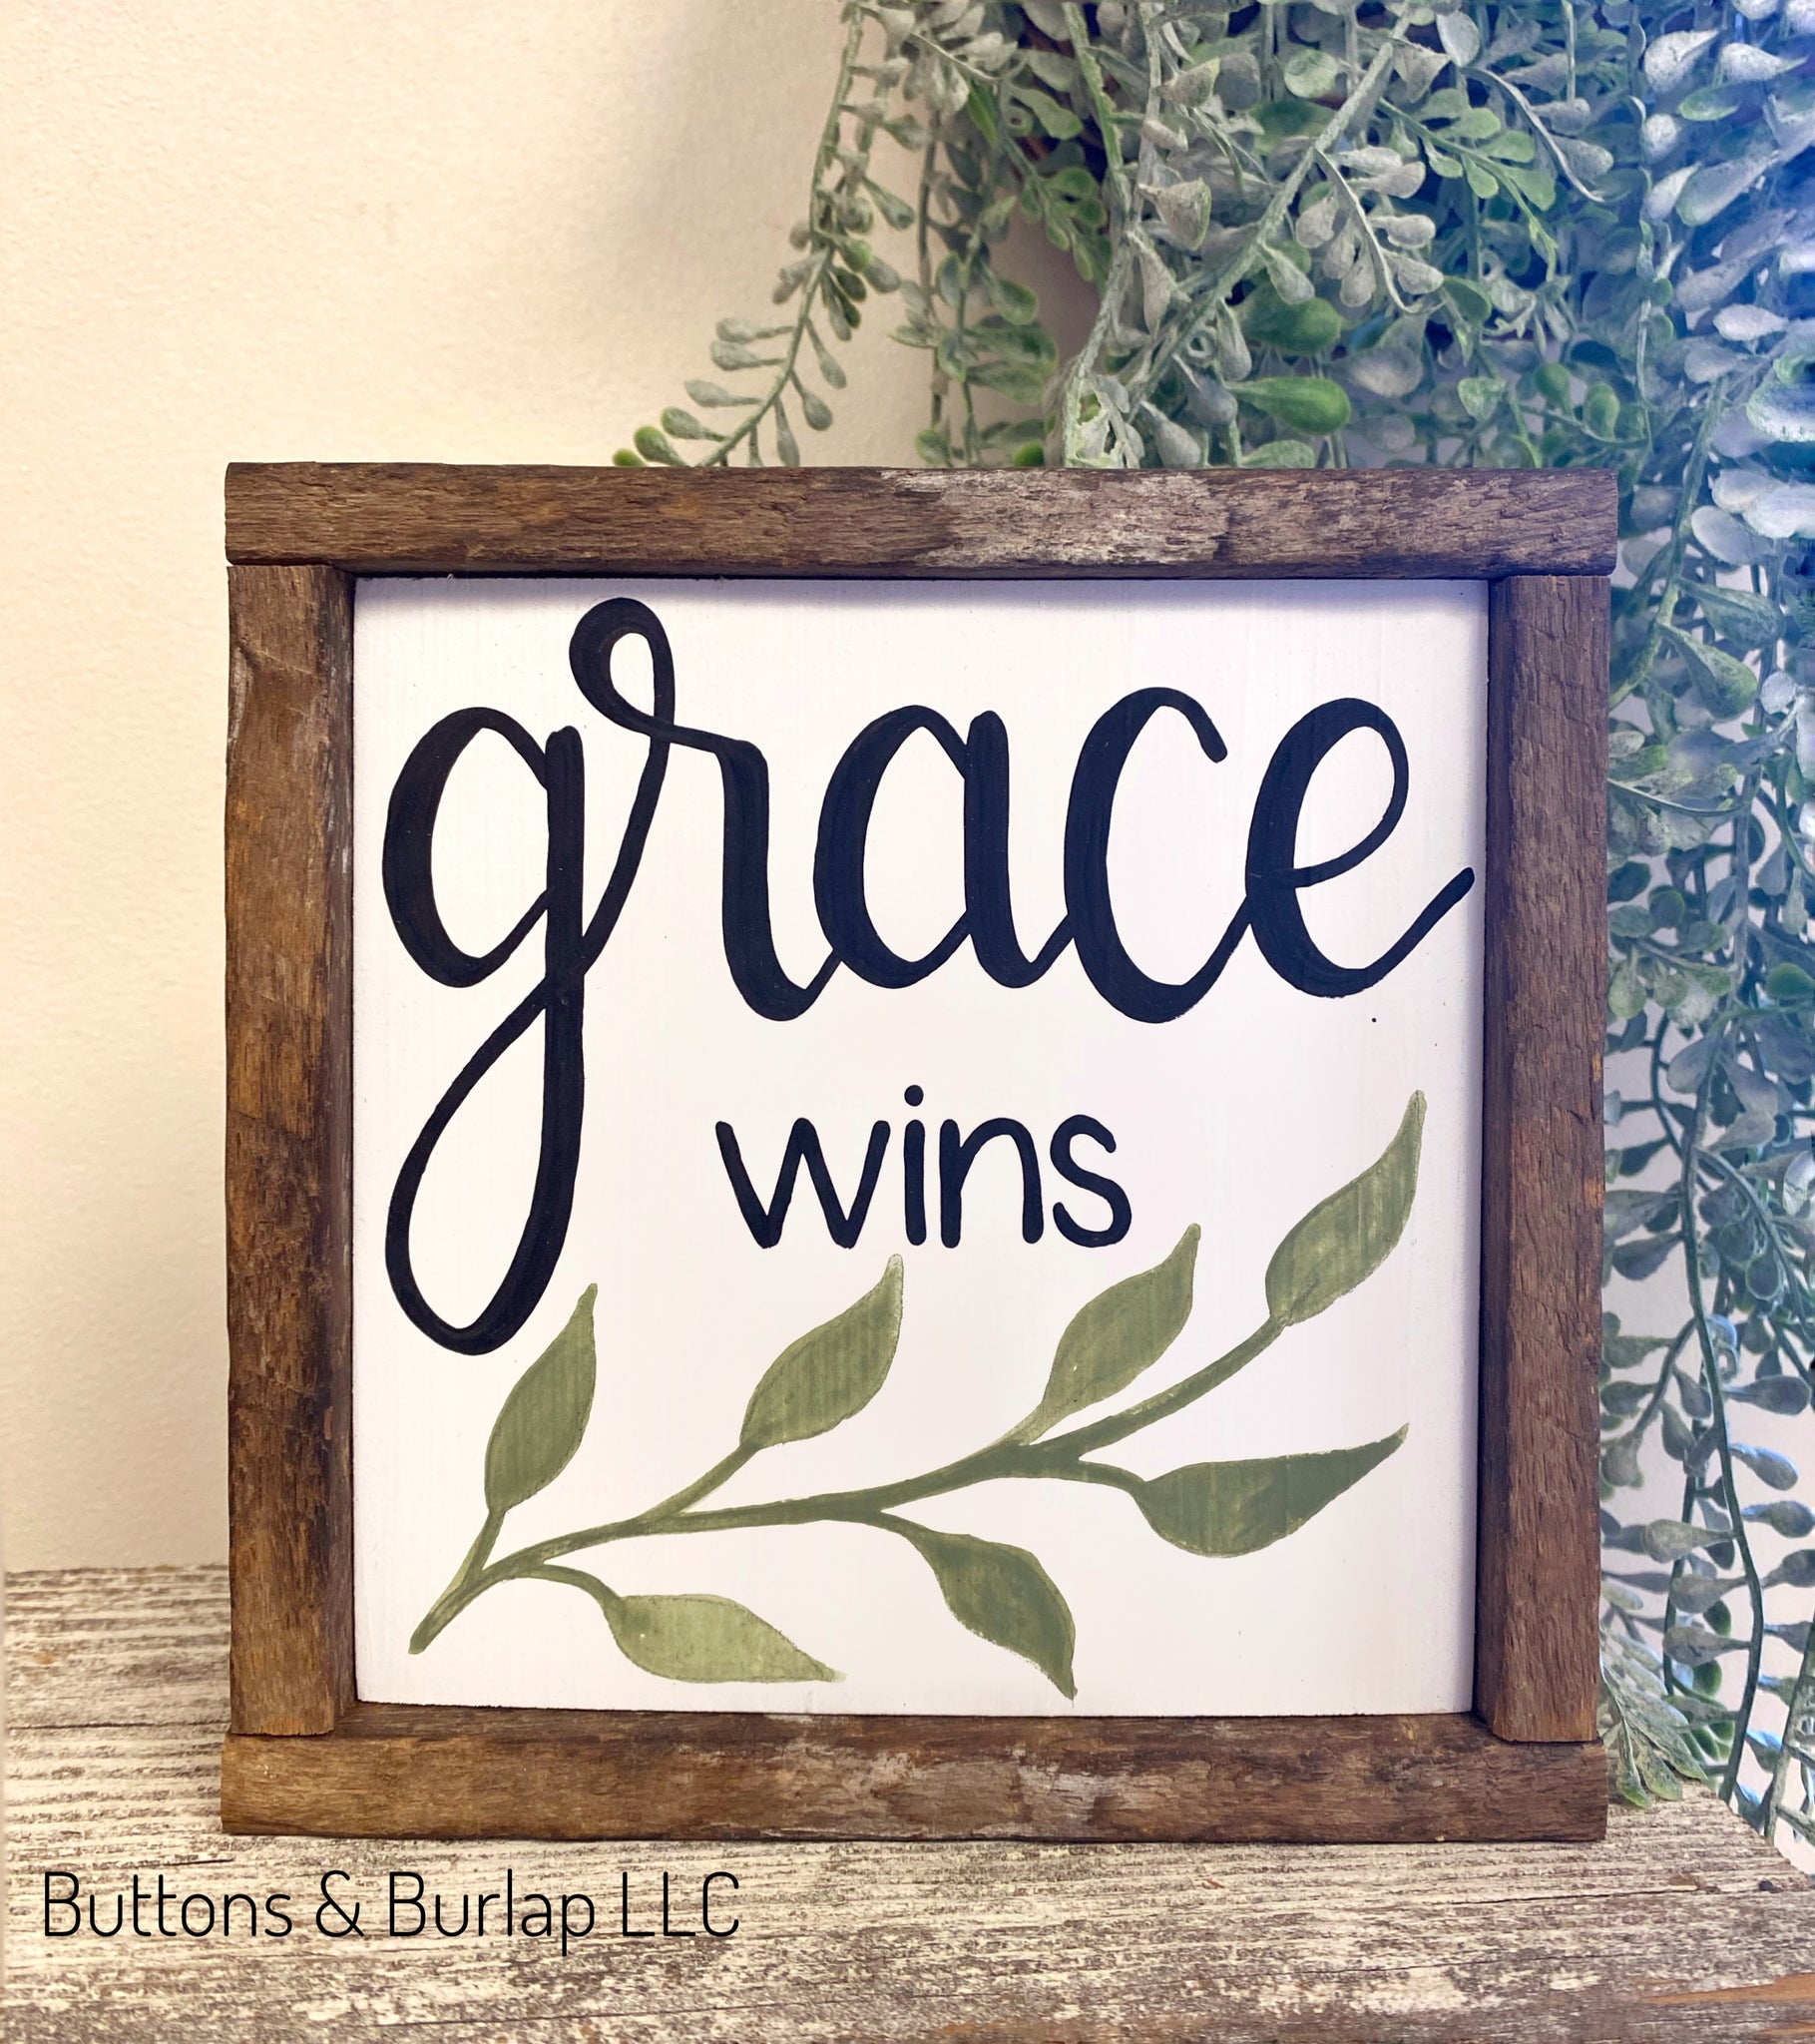 Grace wins